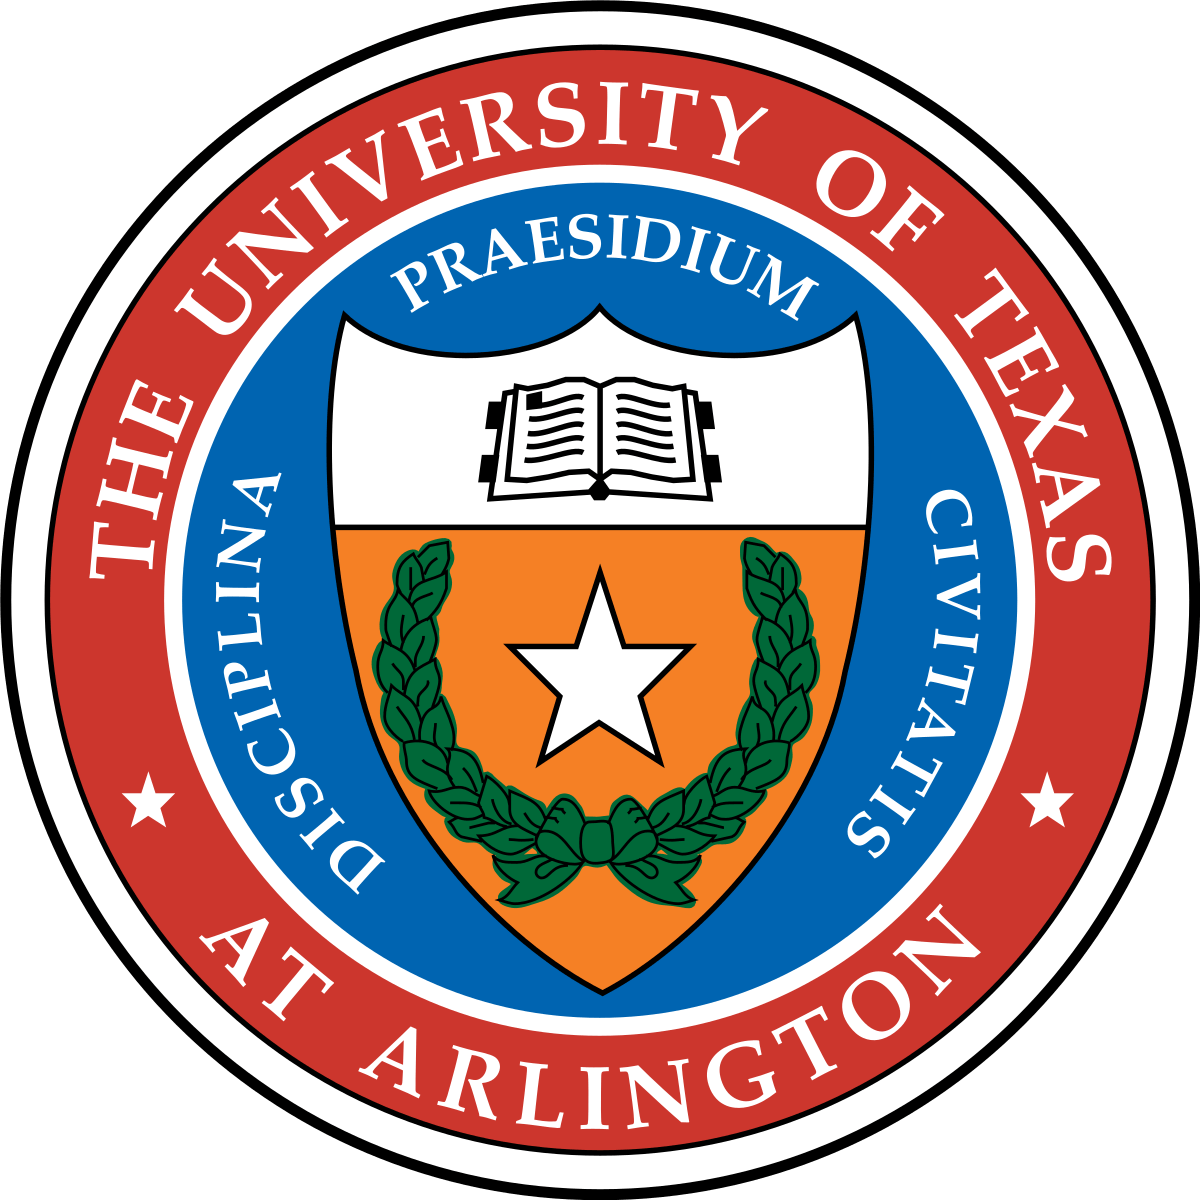 Uta Logo - University of Texas